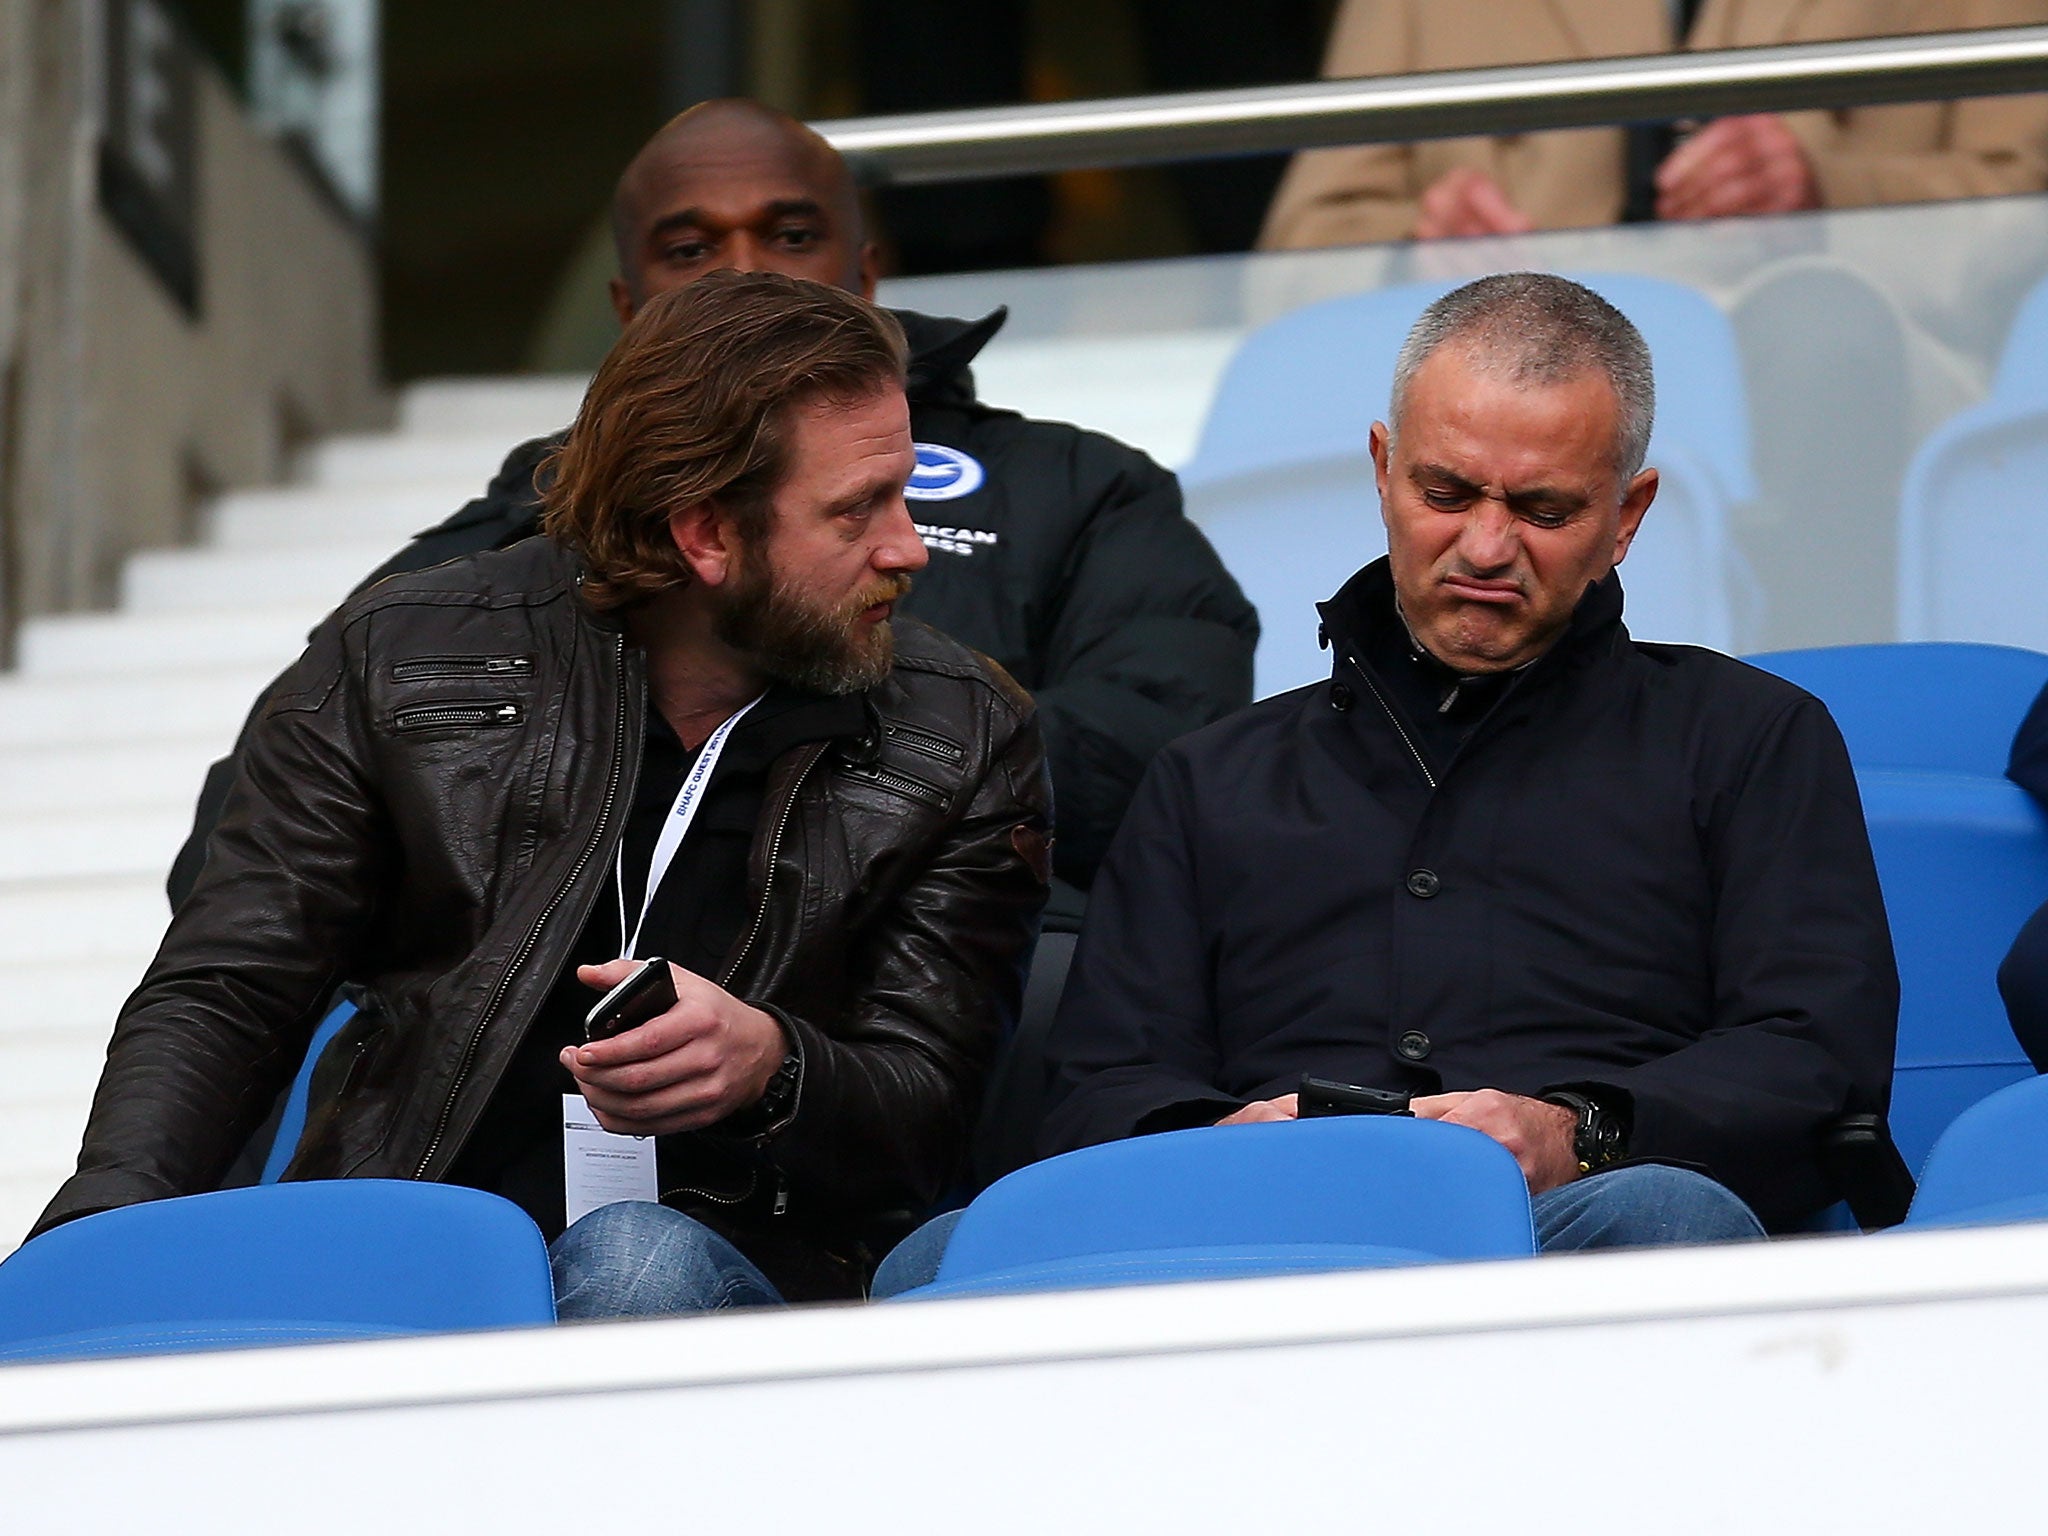 Jose Mourinho watches Brighton vs Middlesbrough